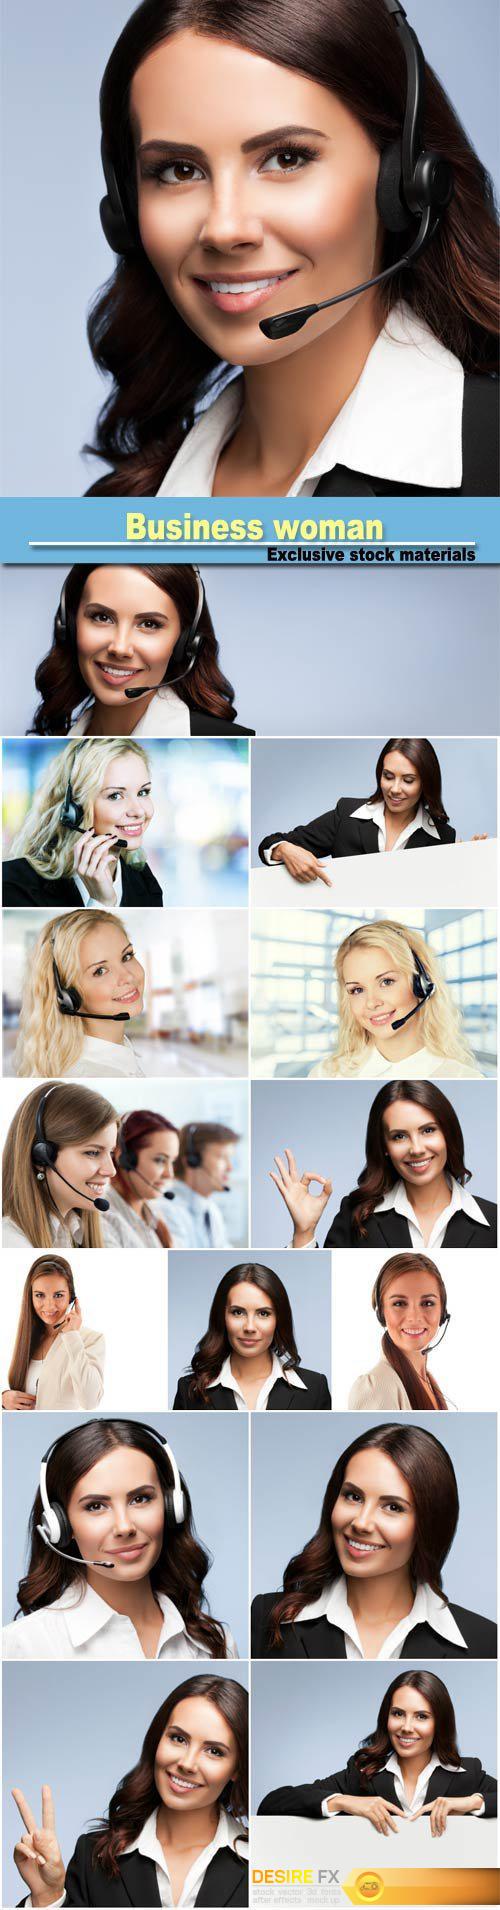 Business woman, women operators